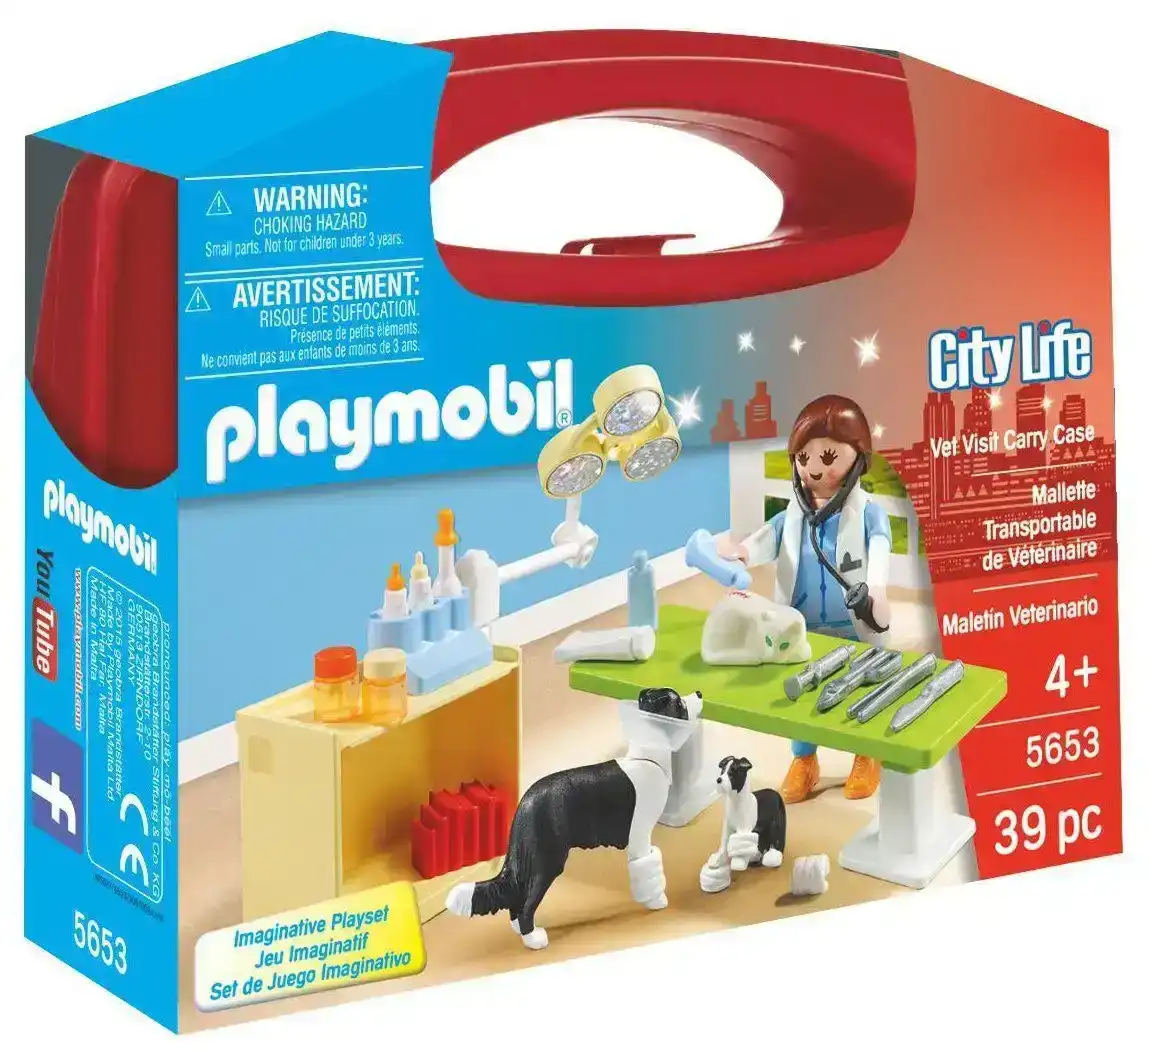 Playmobil Vet Visit Carry Case